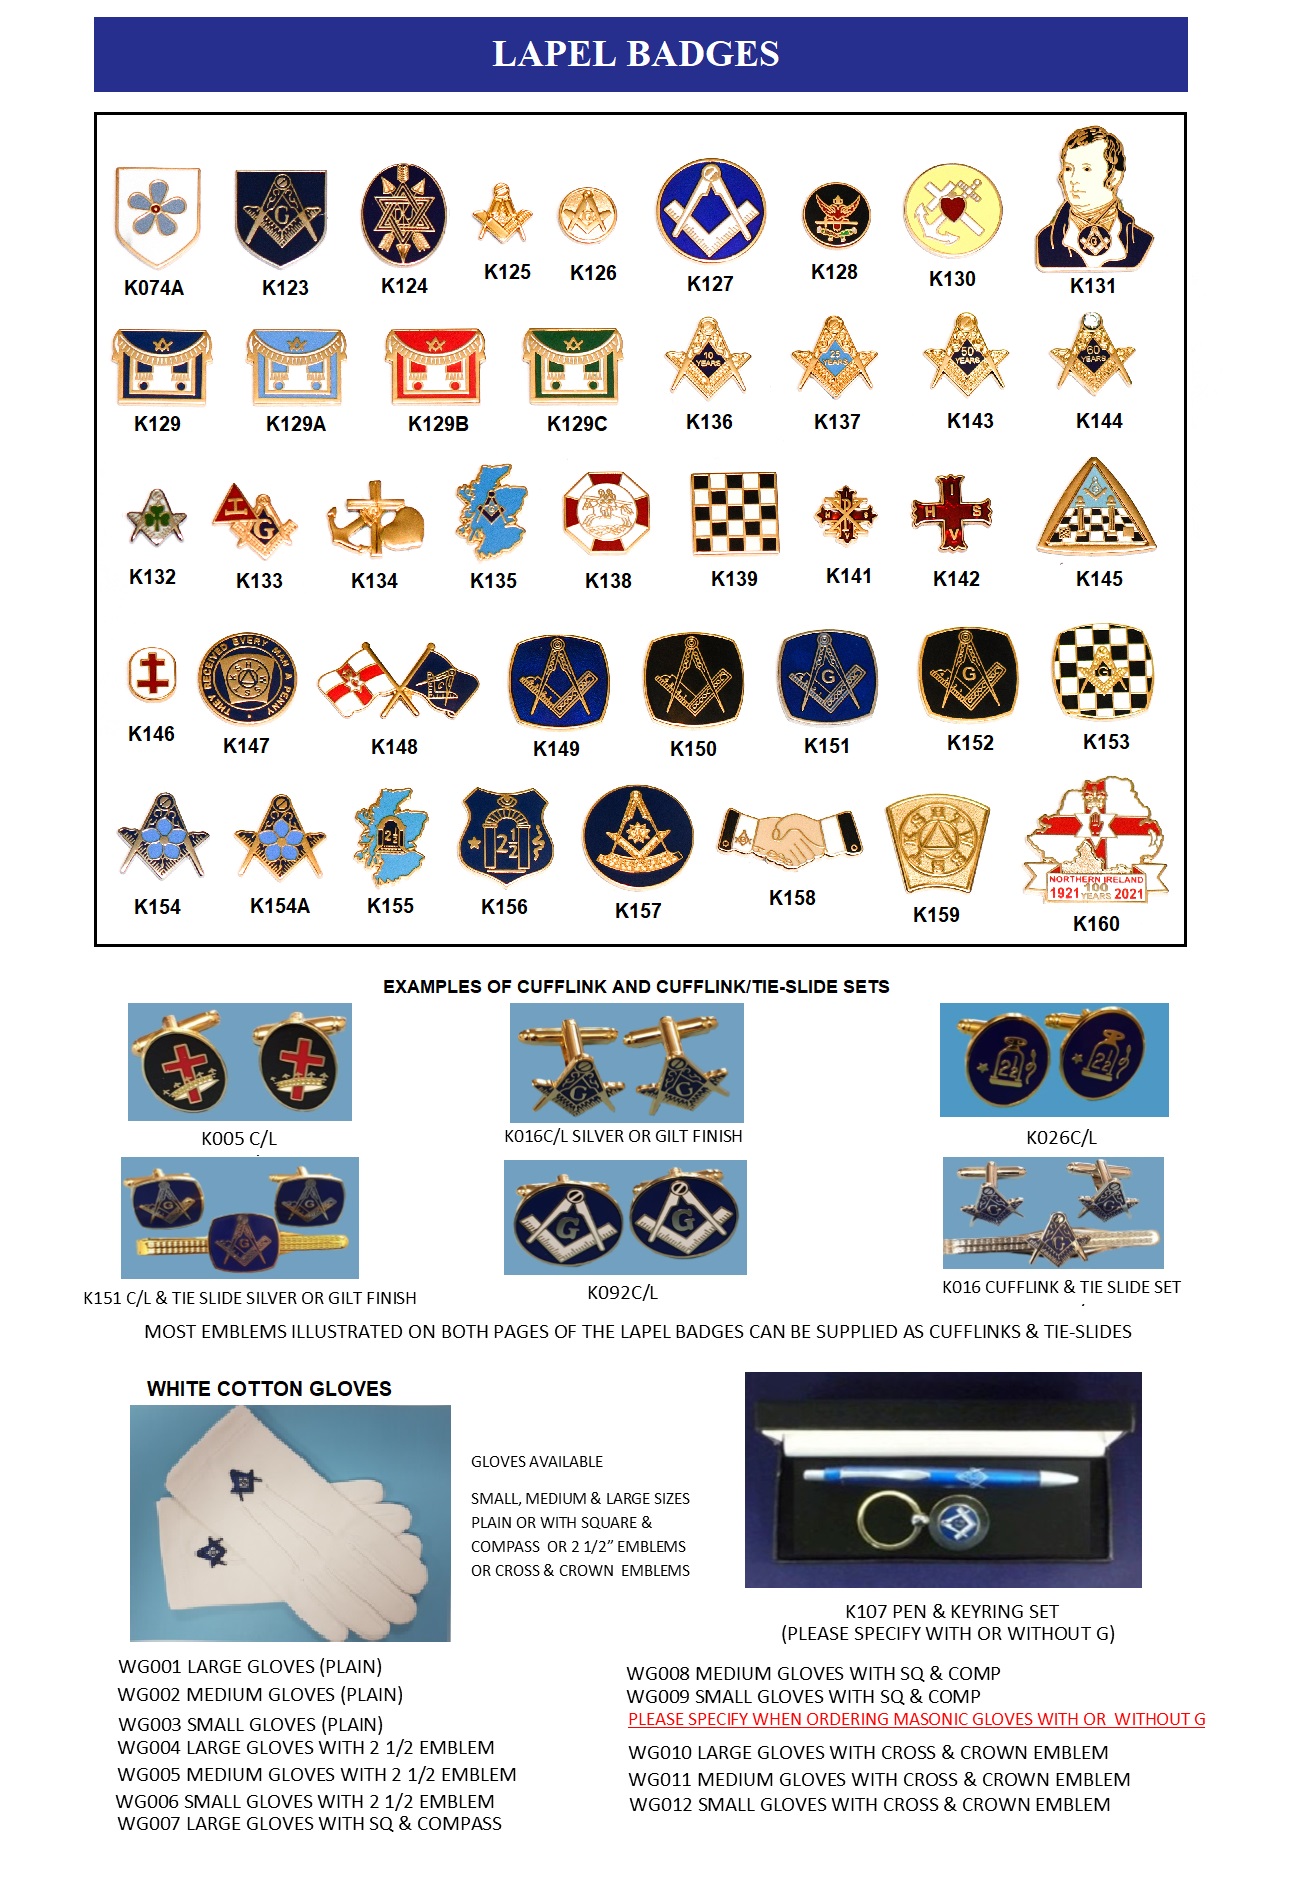 Latest Masonic Badges and products